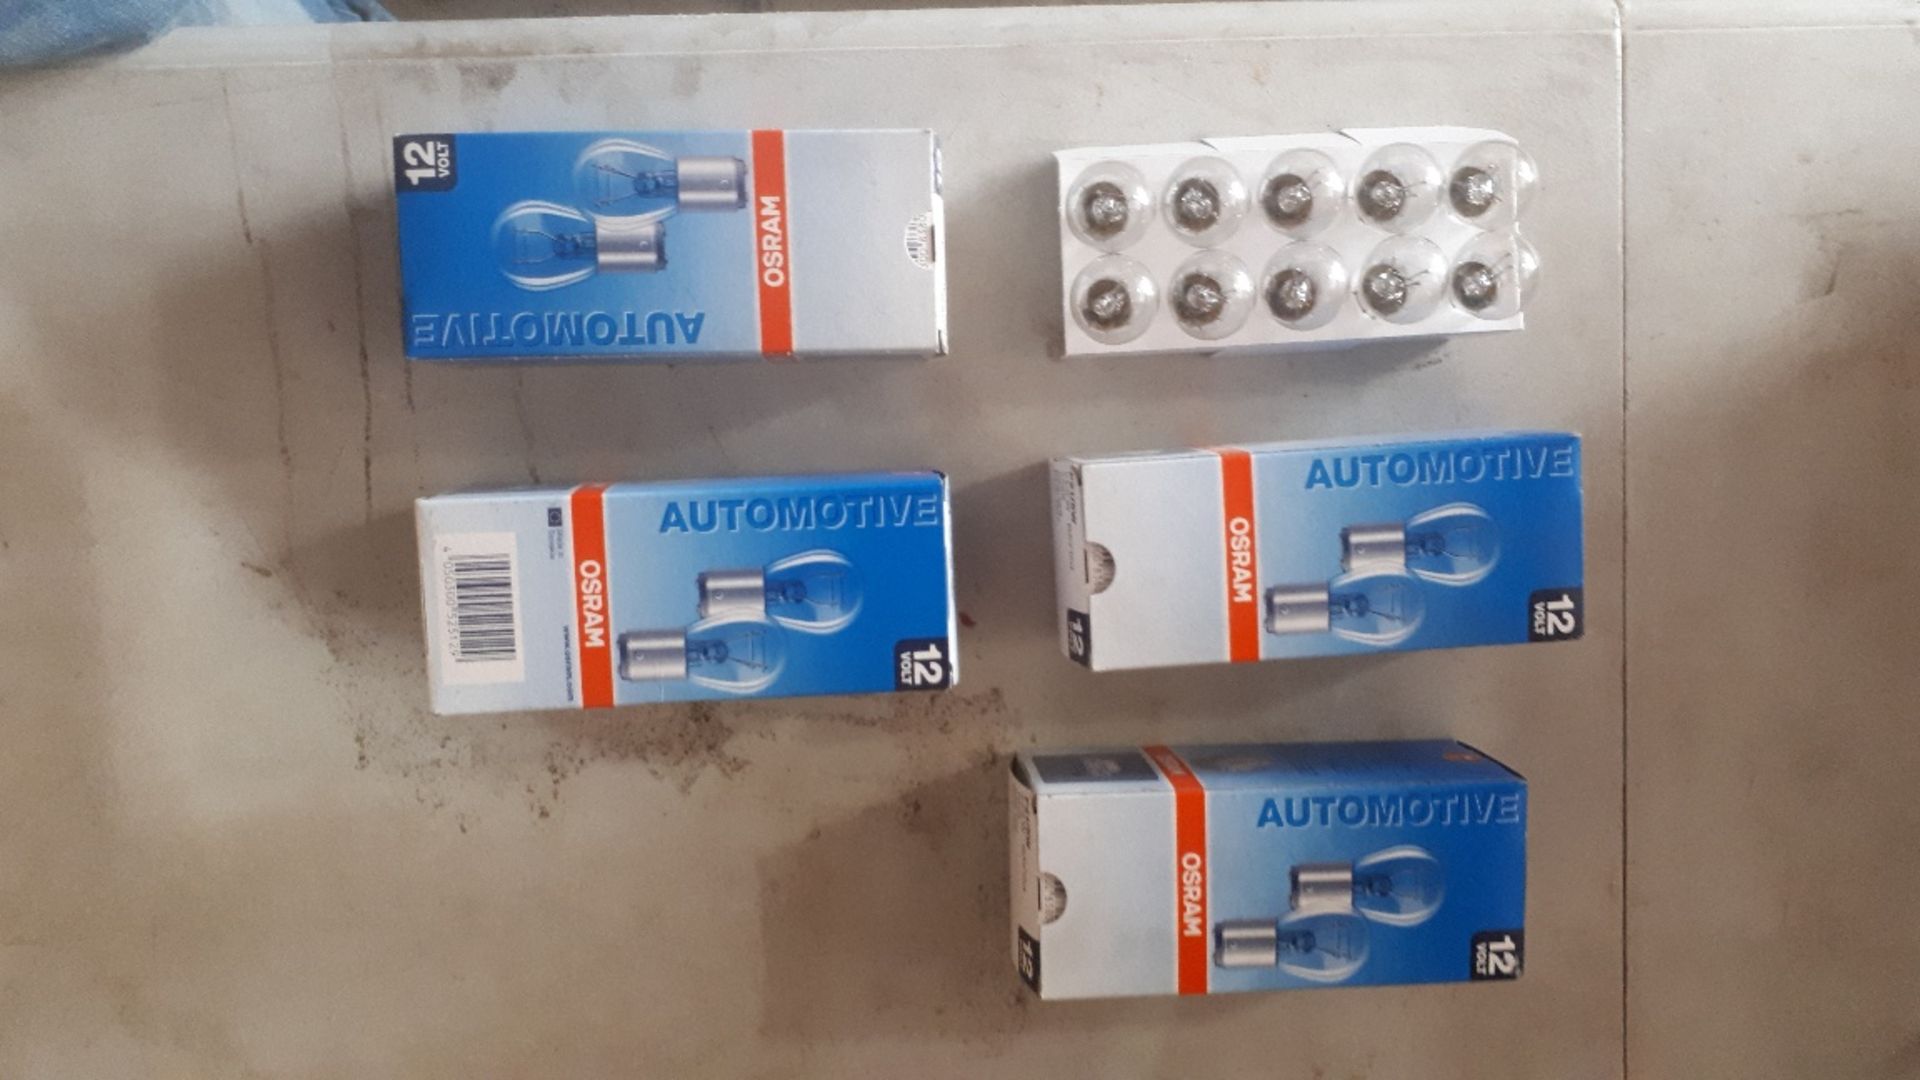 50pcs - Osram automotuive box of 10, 12v P21/5W Bulbs 5 boxes of 10 in lot, total 50pcs